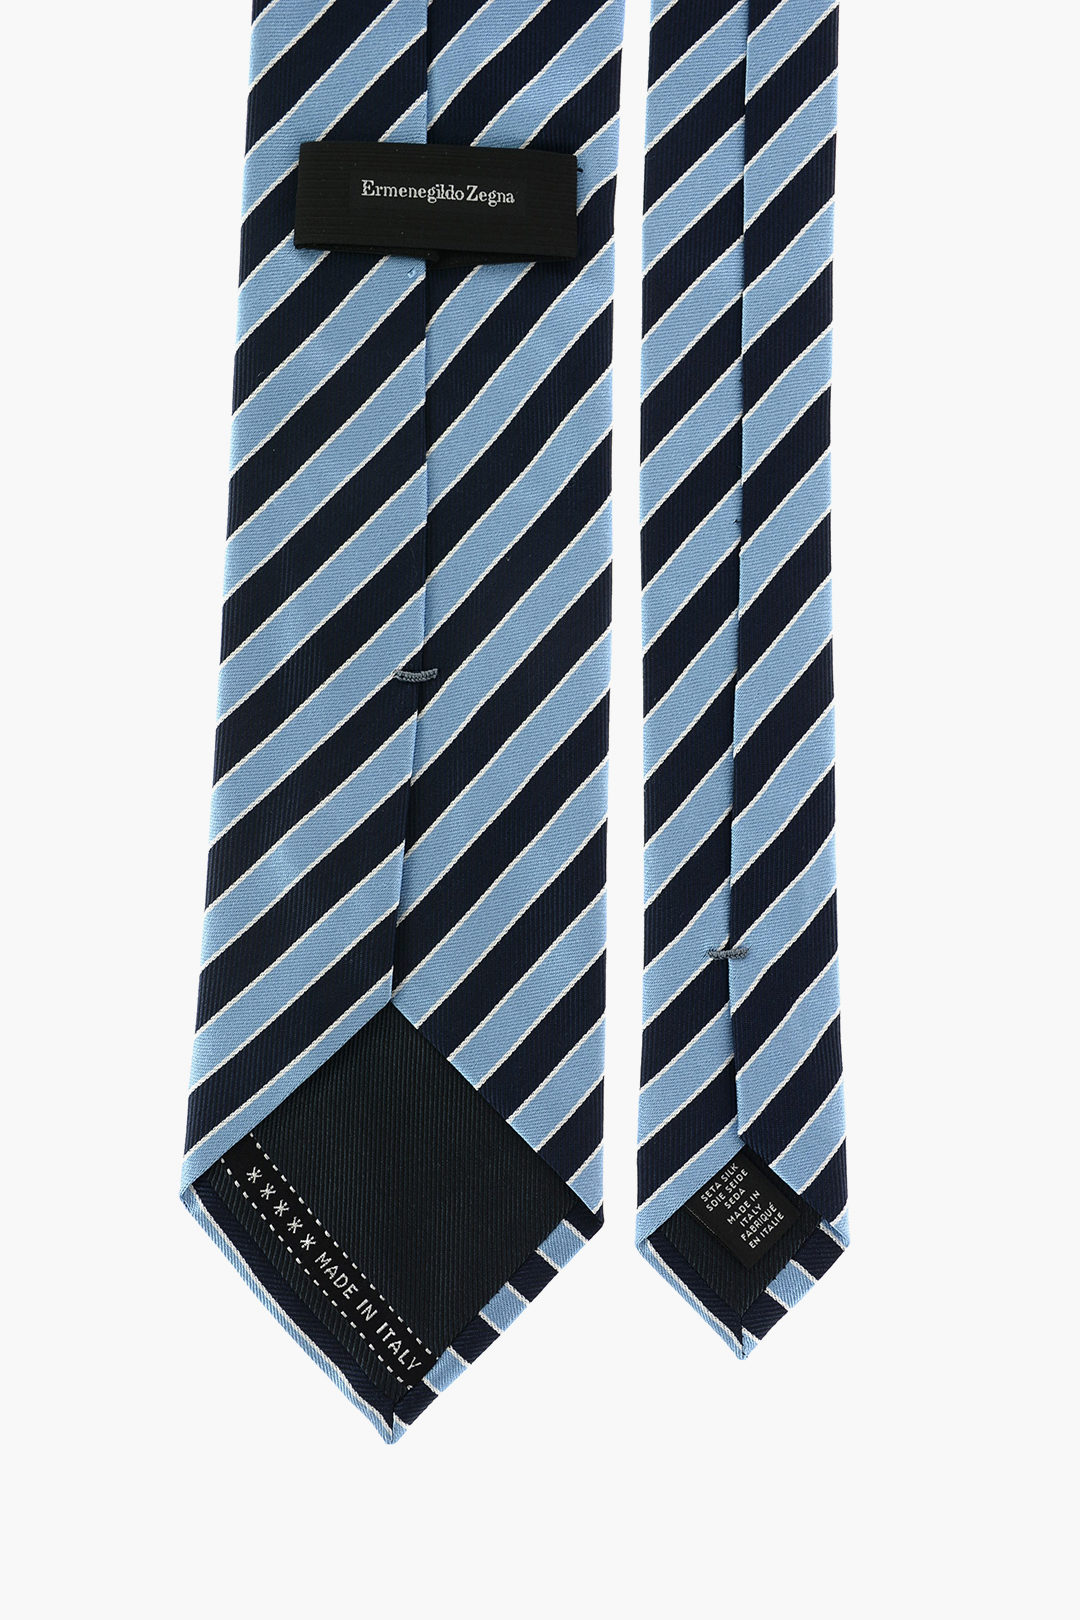 Ermenegildo Zegna ZZEGNA LUXURY striped silk tie men - Glamood Outlet